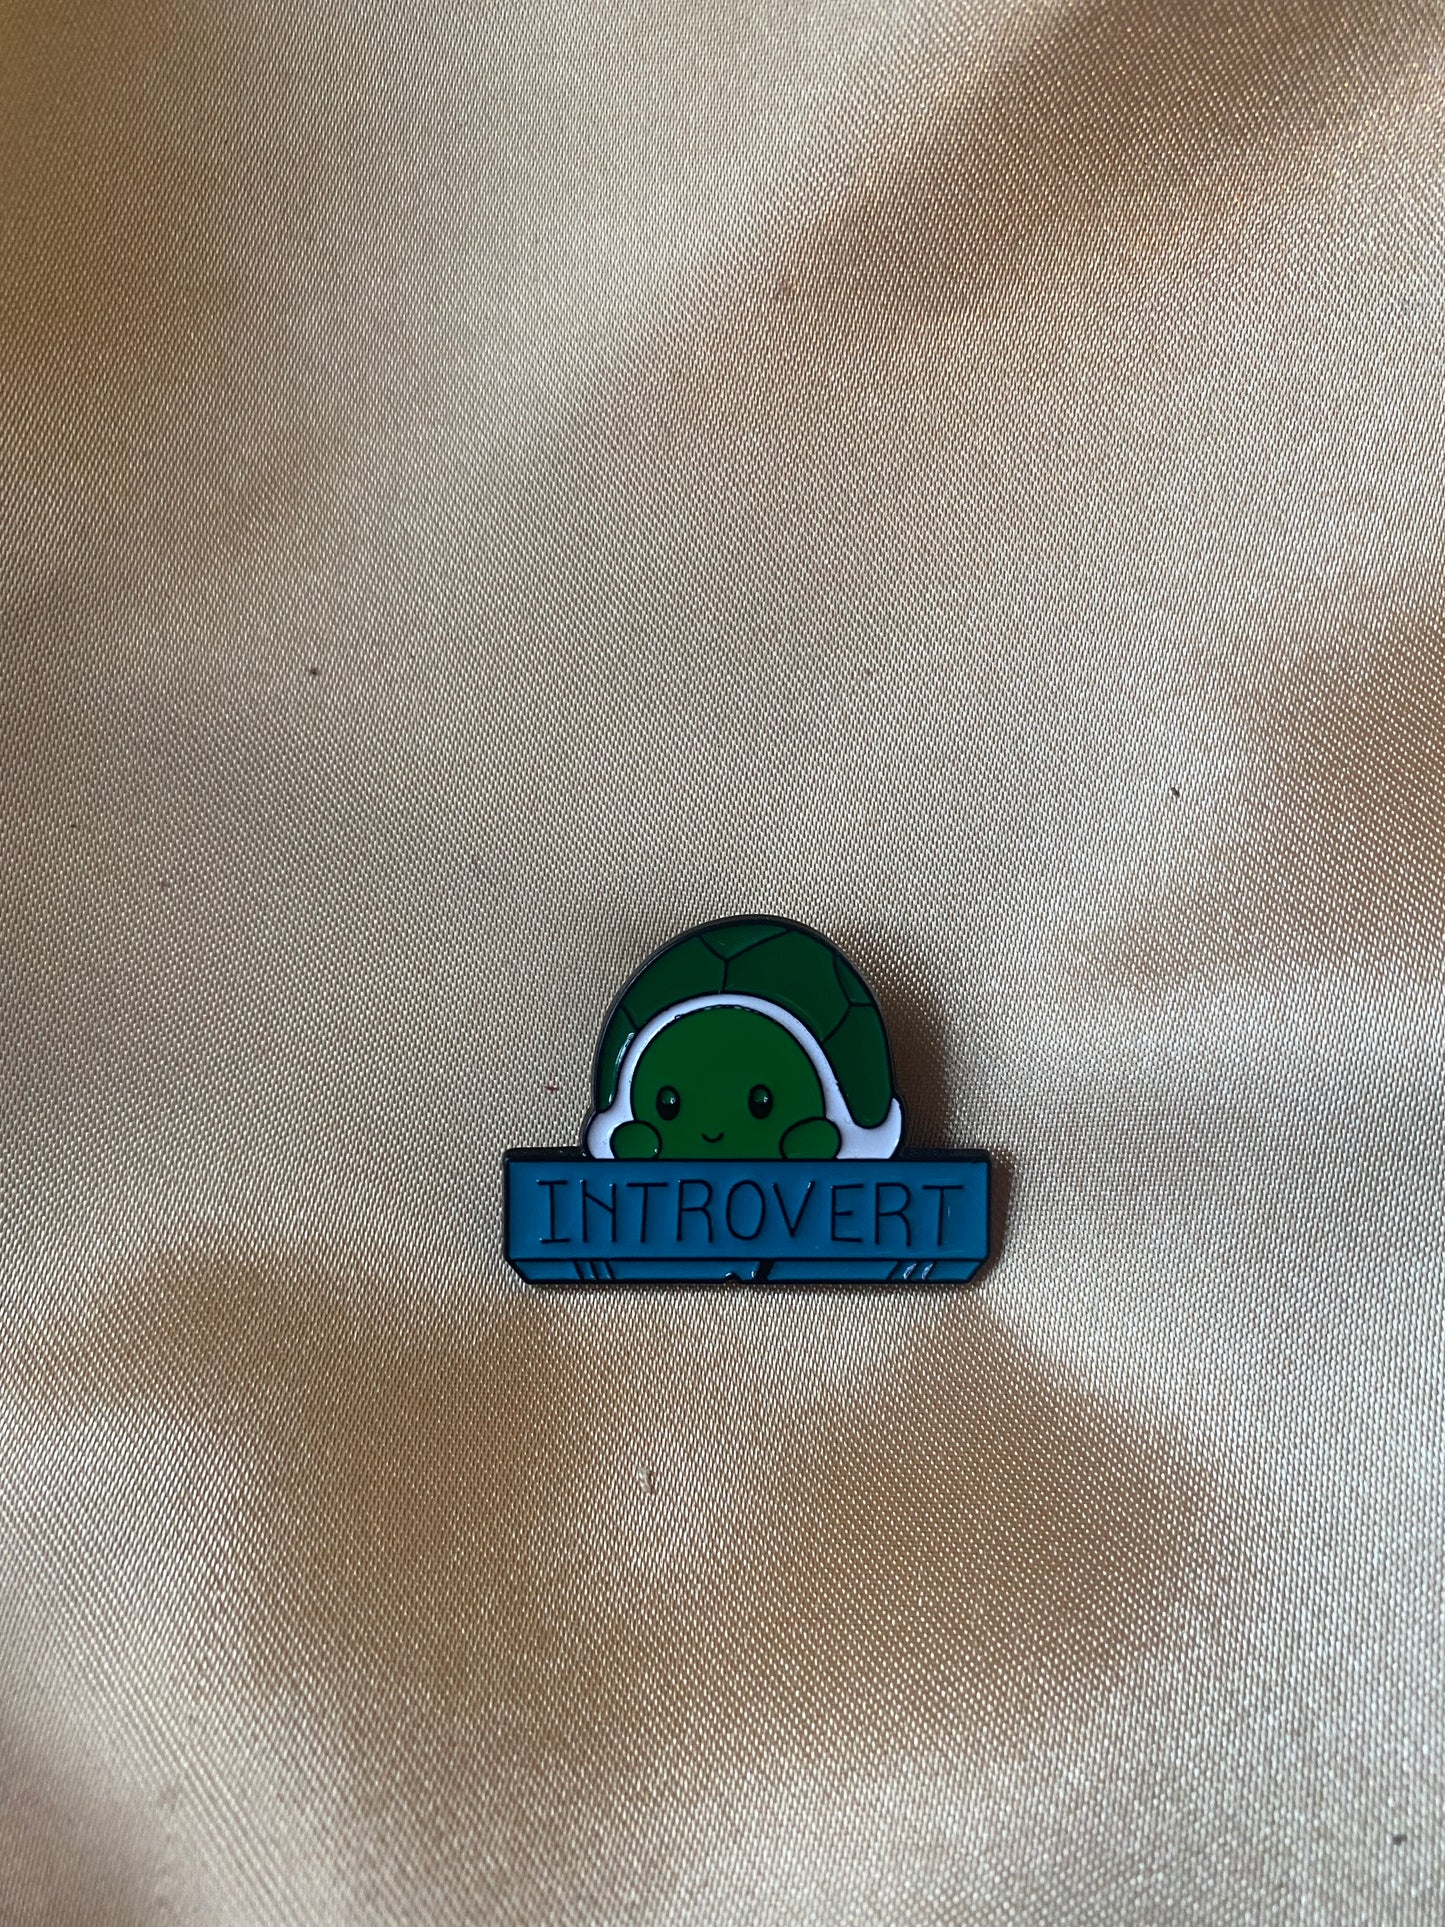 “Introvert” Turtle Pin Badge